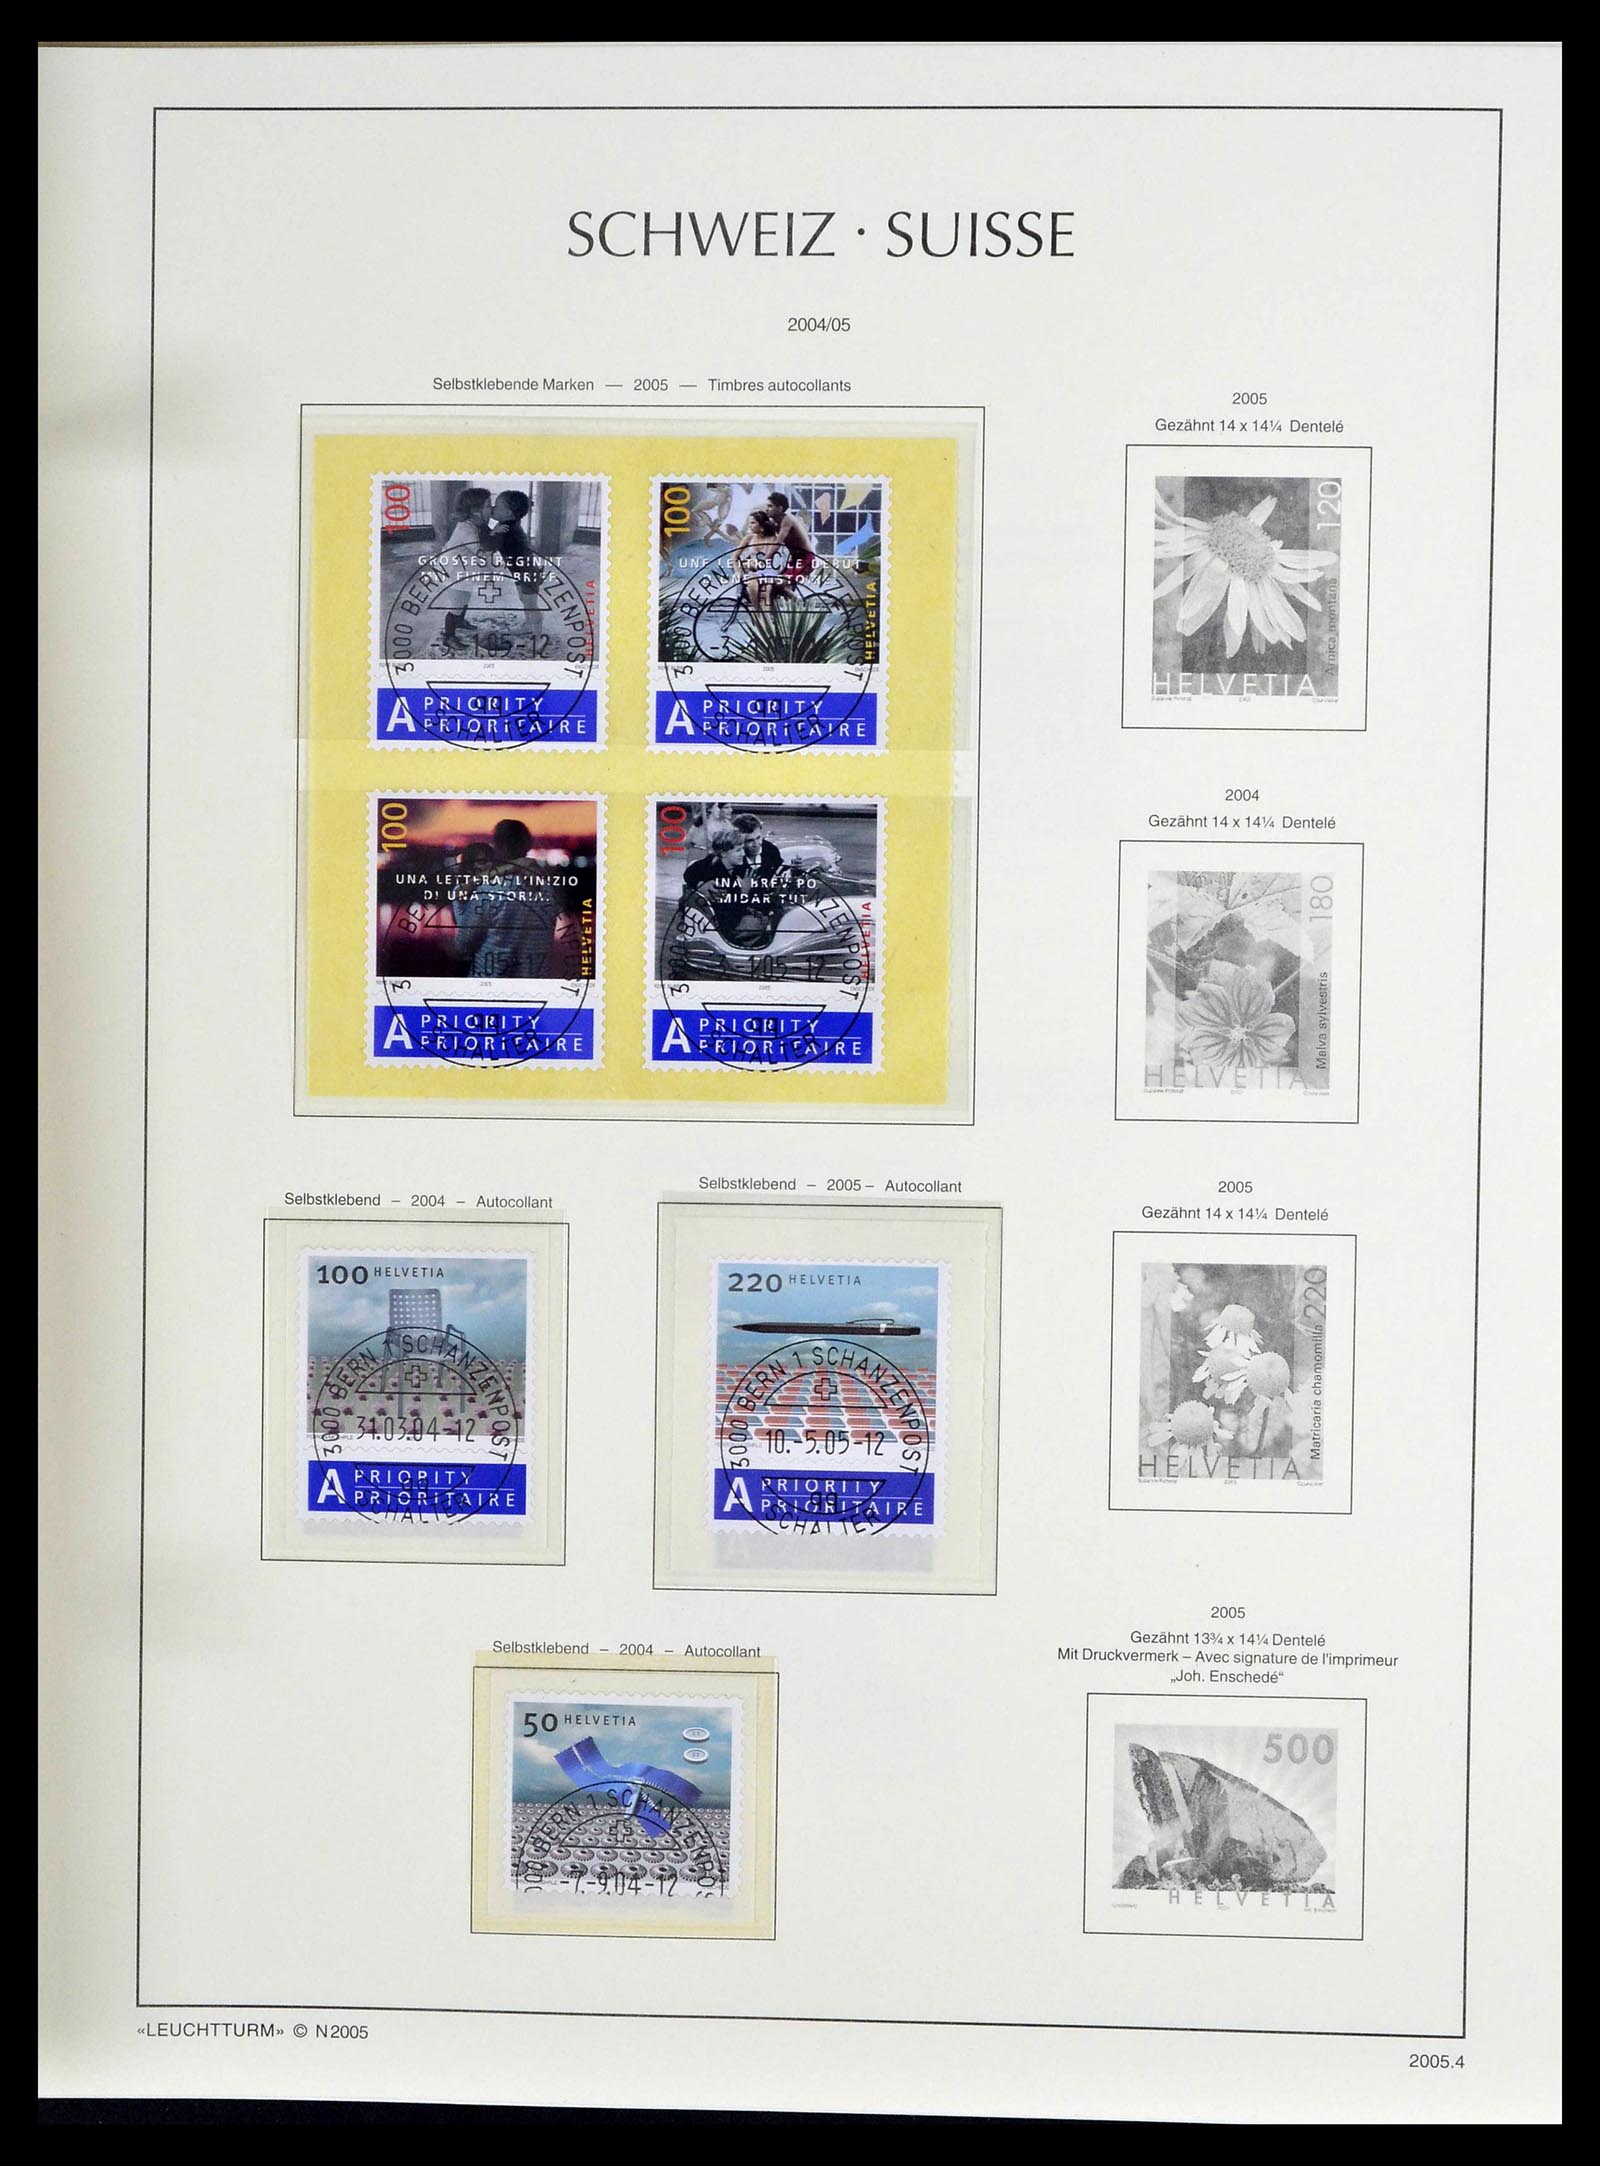 39094 0148 - Stamp collection 39094 Switzerland 1850-2005.